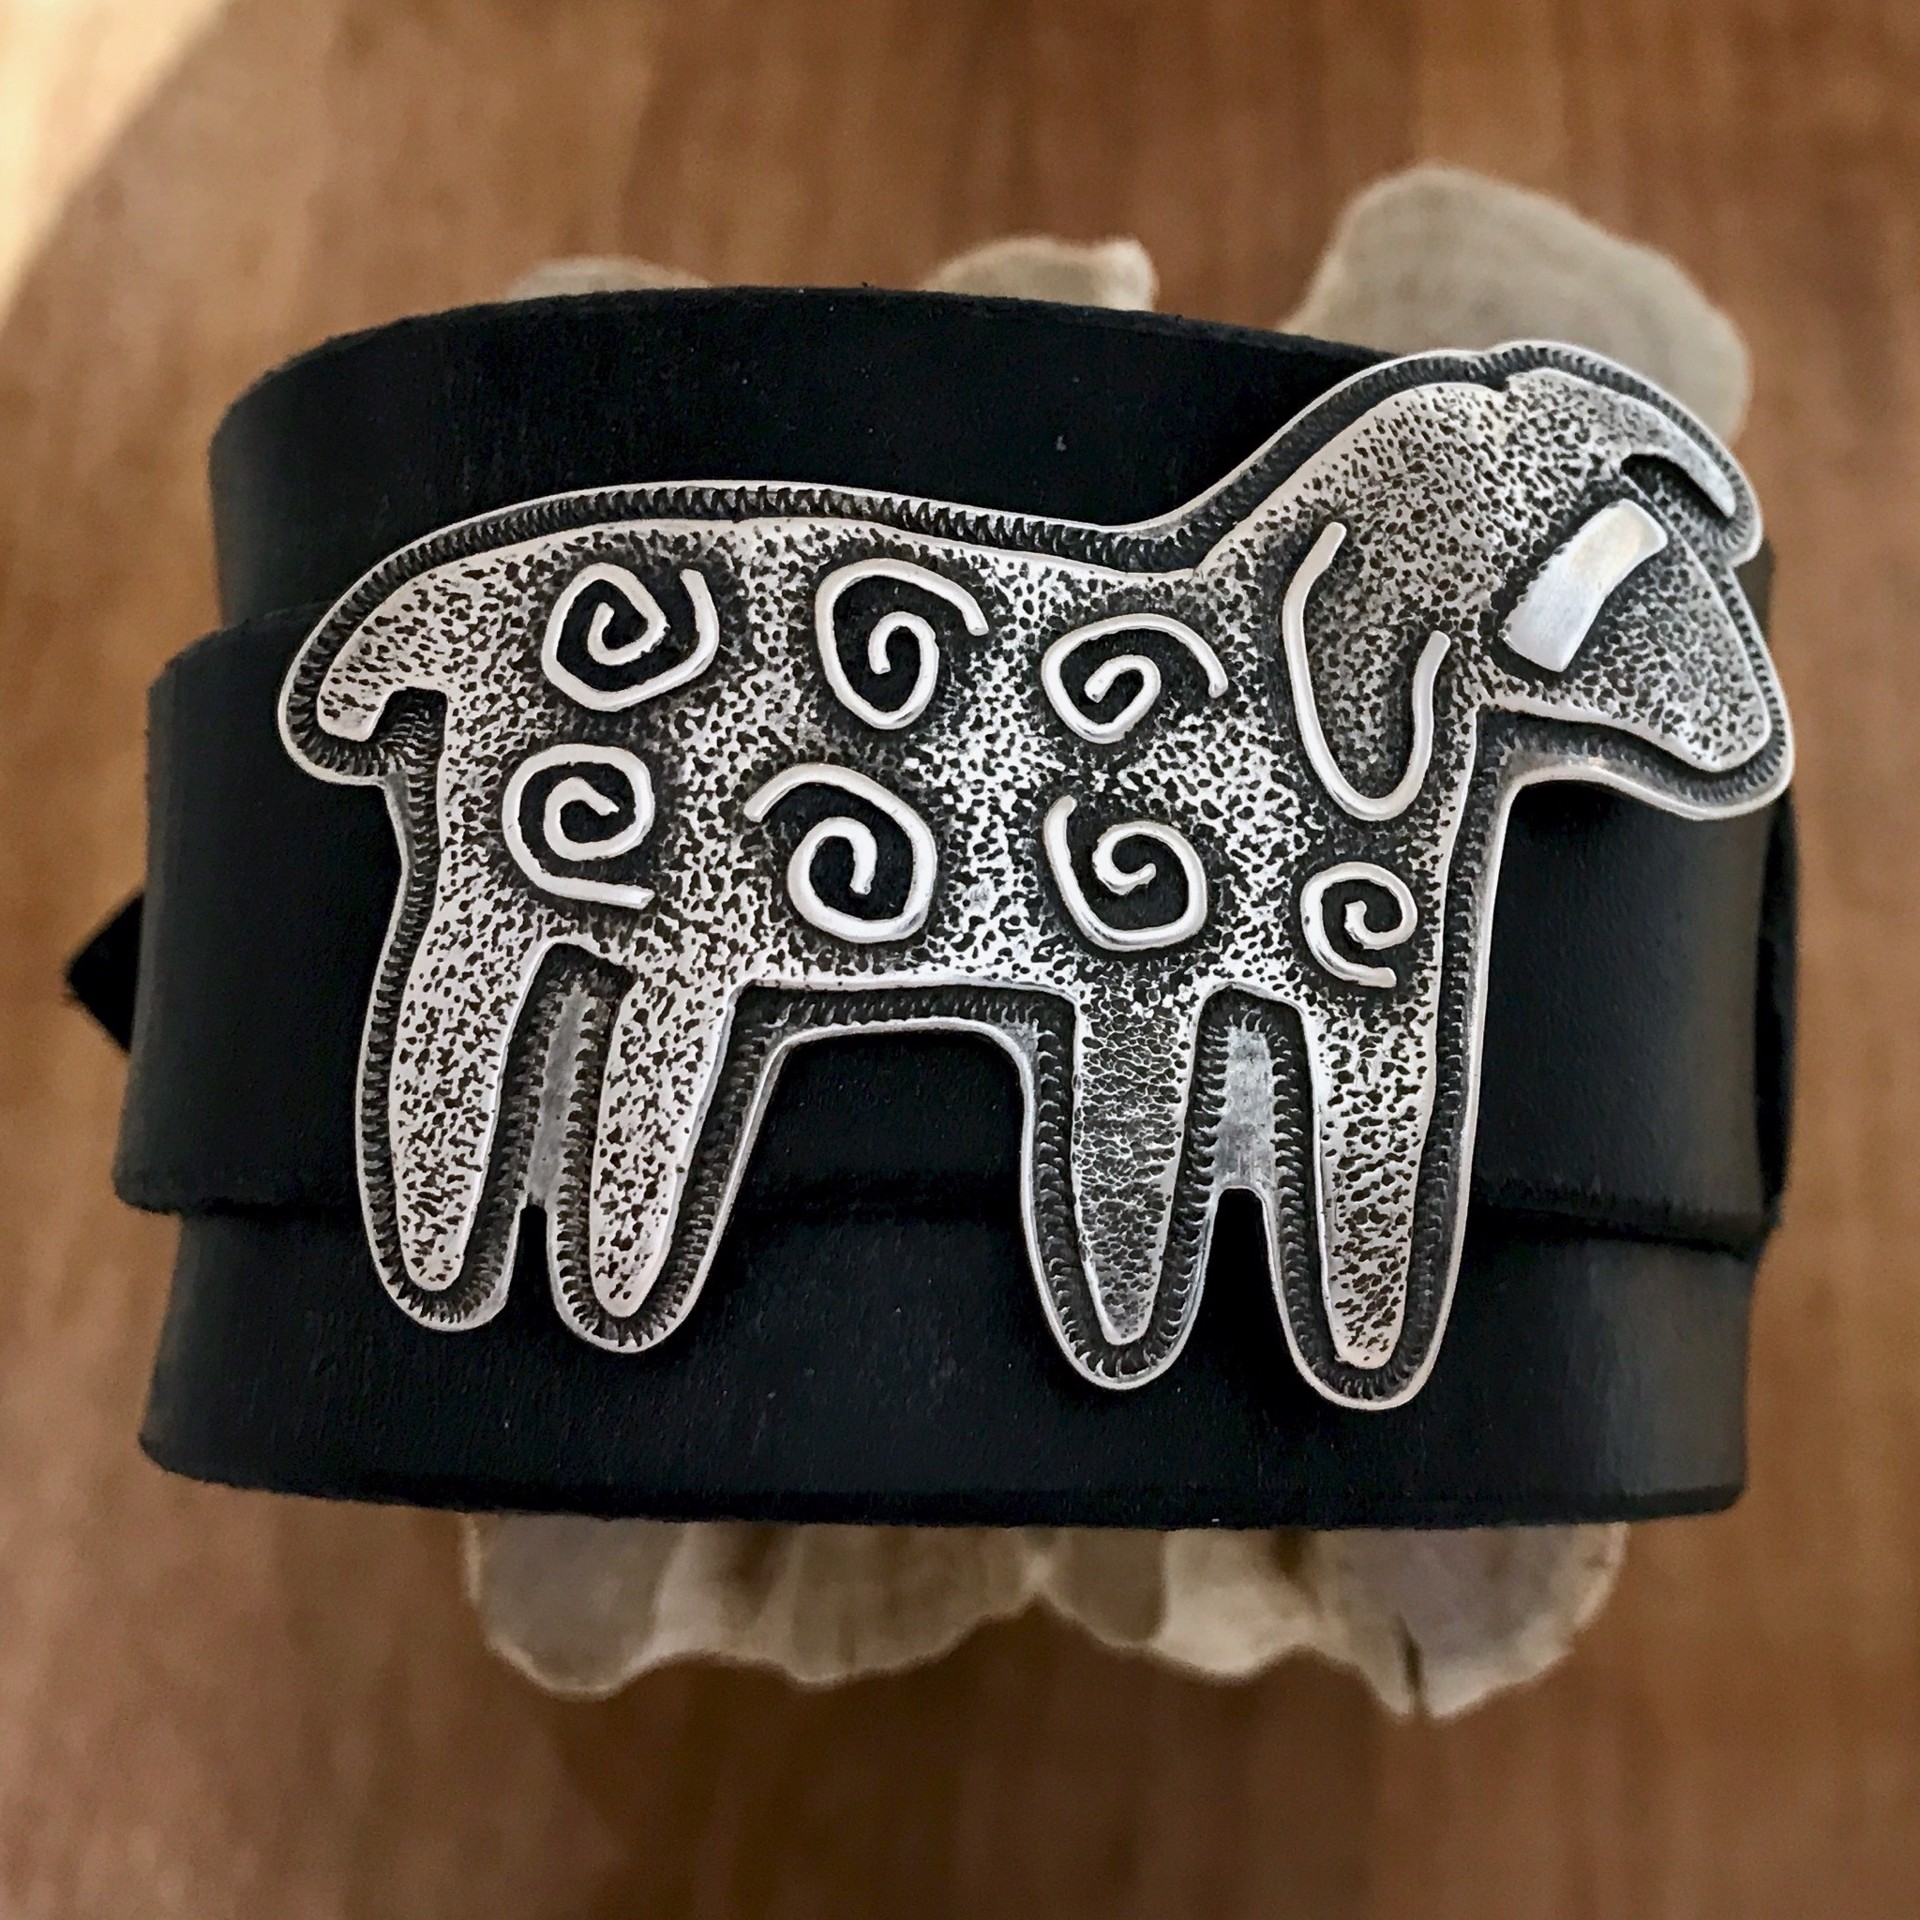 Curly Sheep Leather Cuff bracelet by Melanie Yazzie